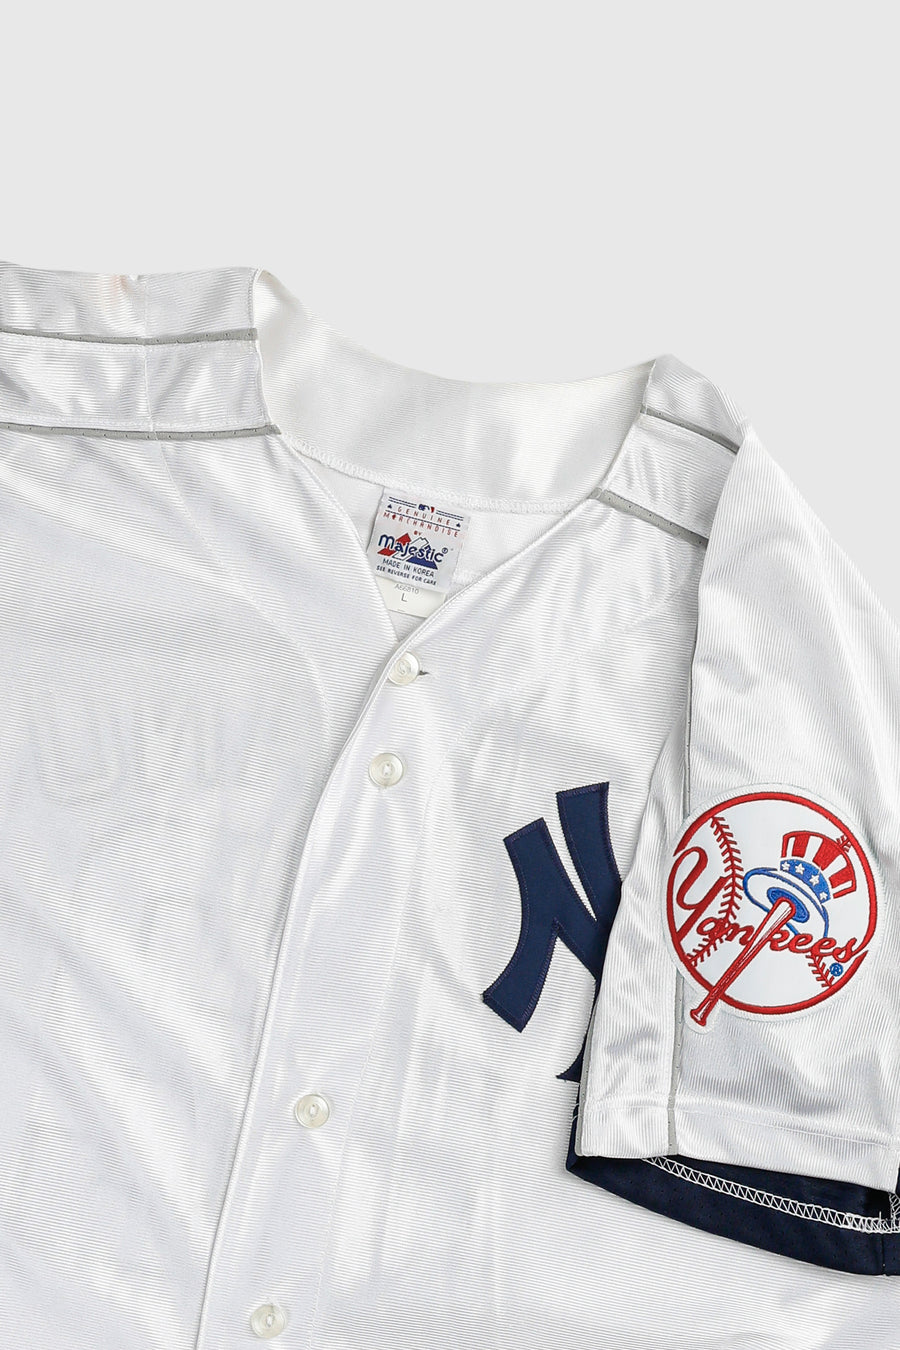 Vintage NY Yankees MLB Jersey - L